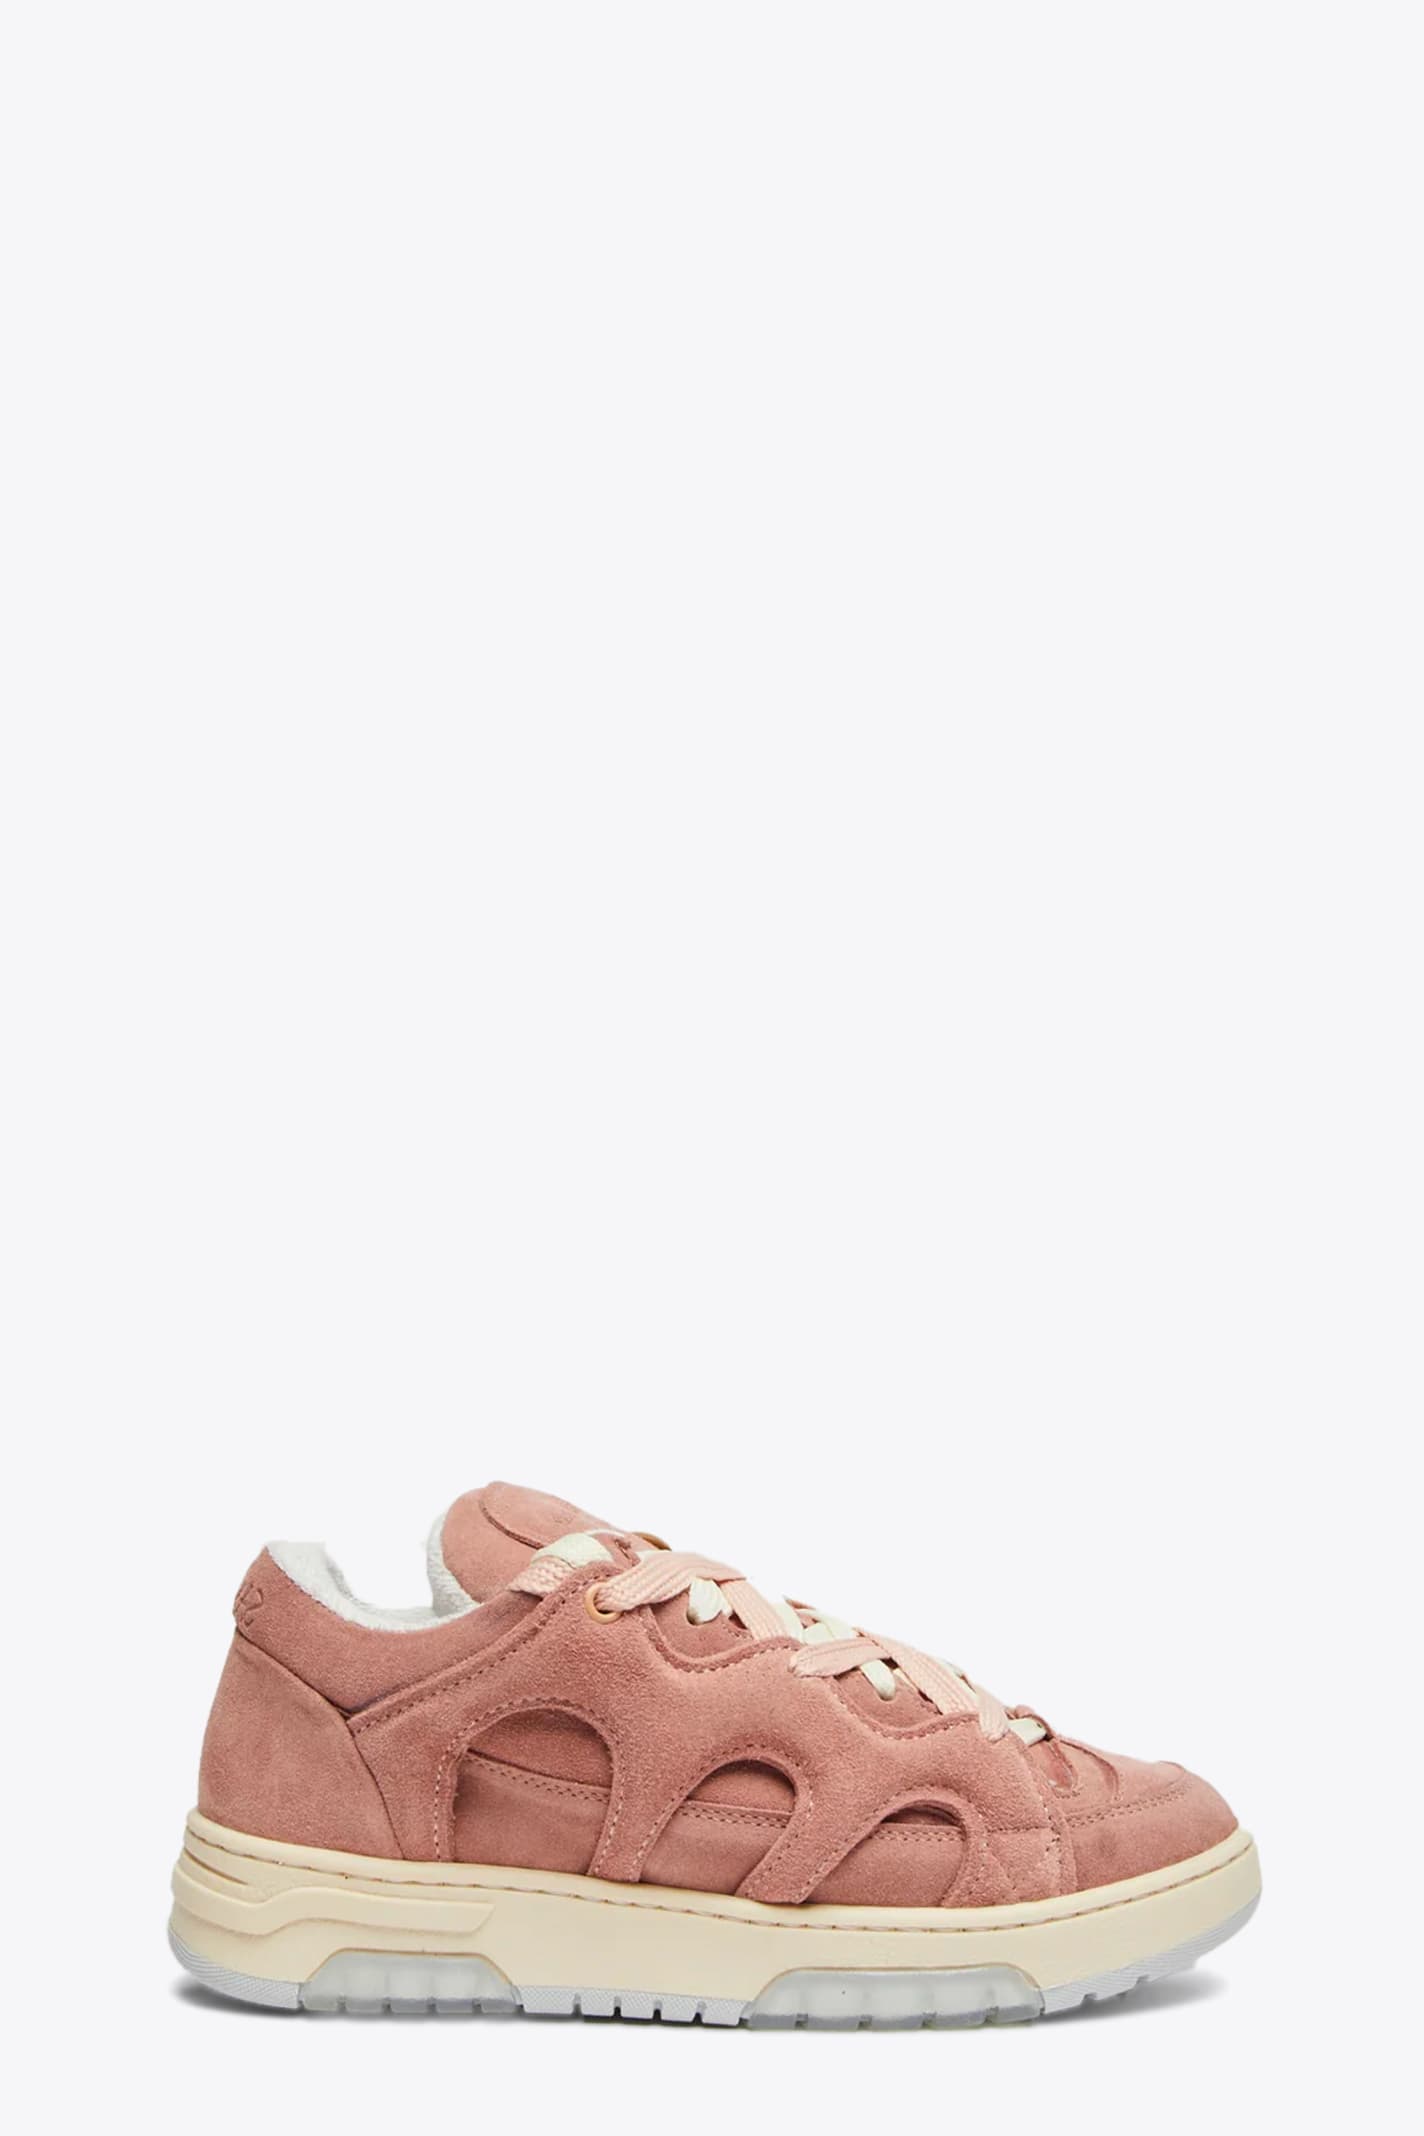 Paura Santha 1 Suede Antique Pink Suede Low Sneaker